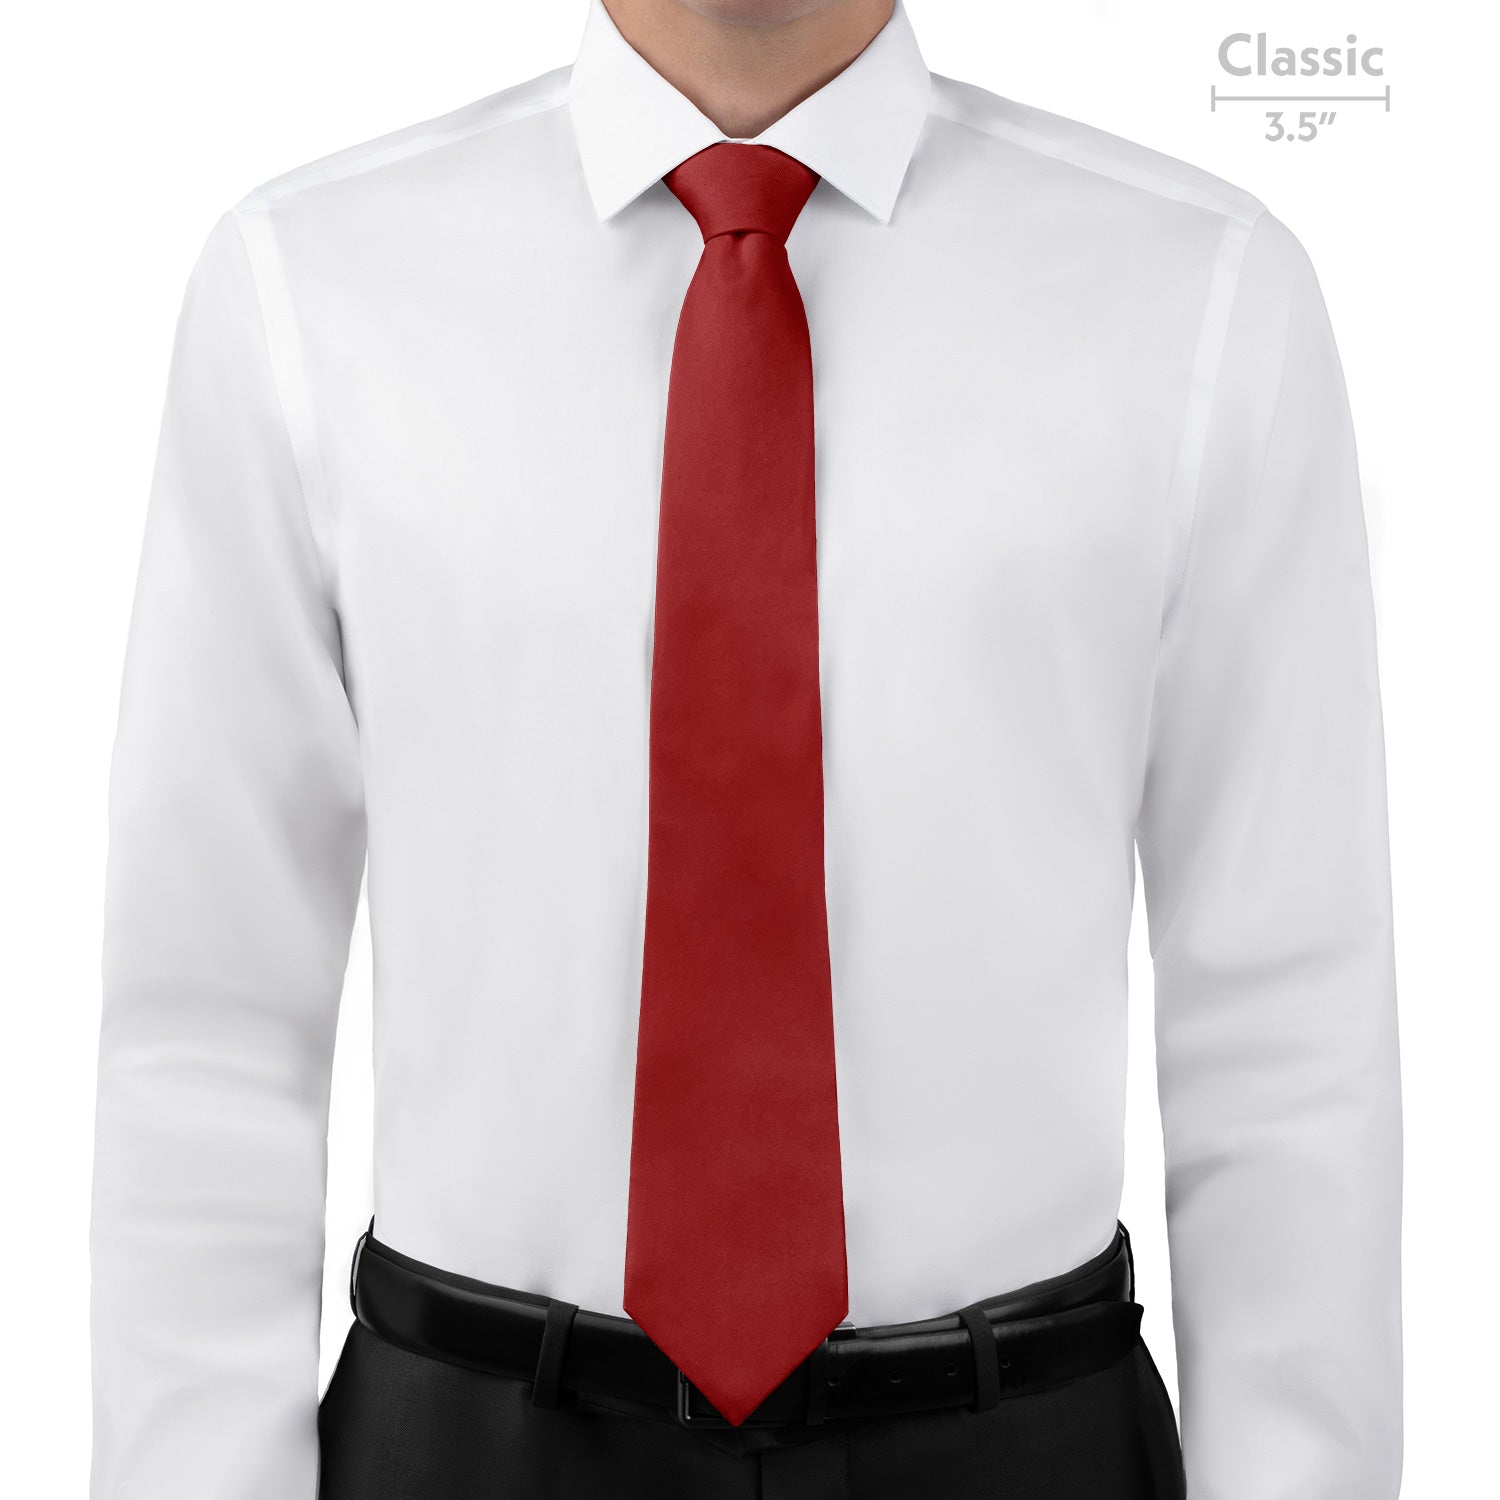 Solid KT Burgundy Necktie - Classic - Knotty Tie Co.